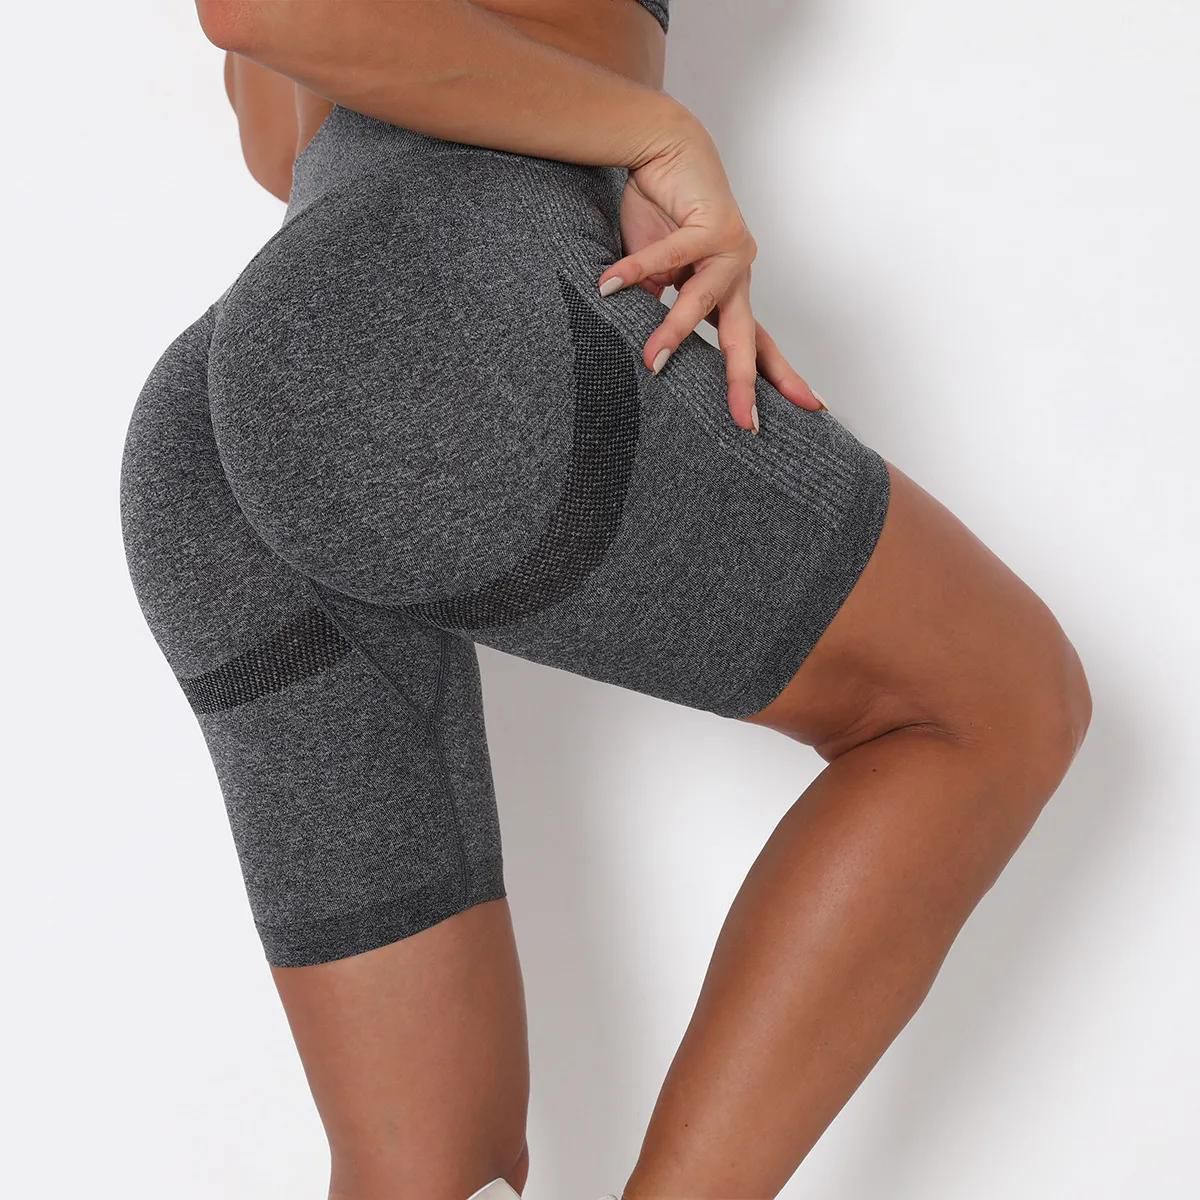 Seamless Sports Shorts For Women Hip Push Up Short Leggings High Waist Gym Yoga Shorts Tummy Control Workout Fitness Shorts